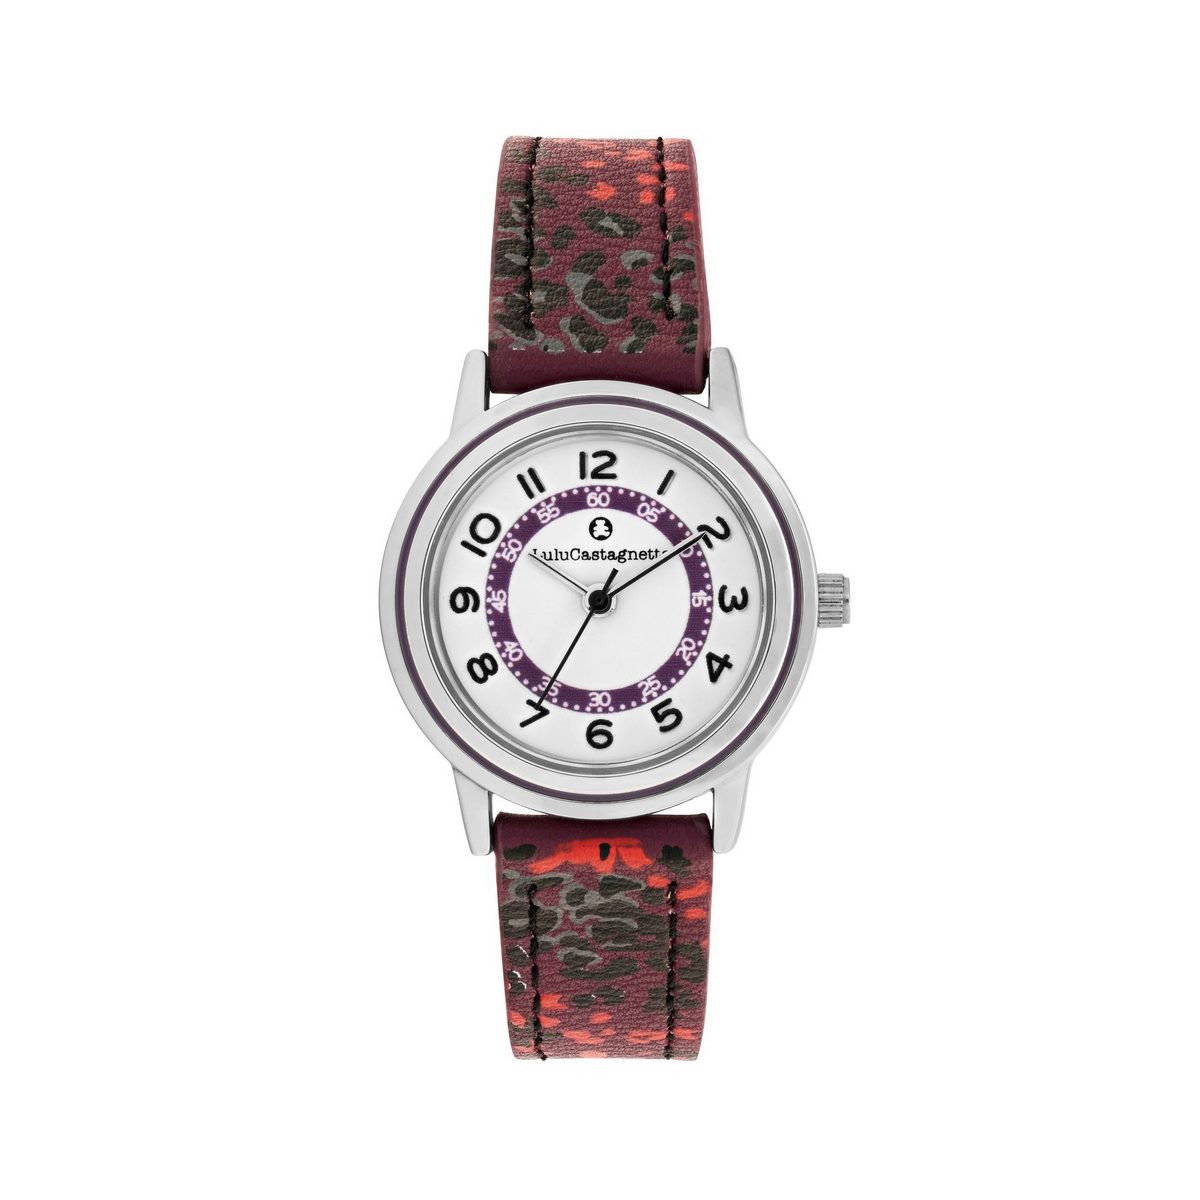 Montre Fille LuluCastagnette - cadran blanc - bracelet noir et violet